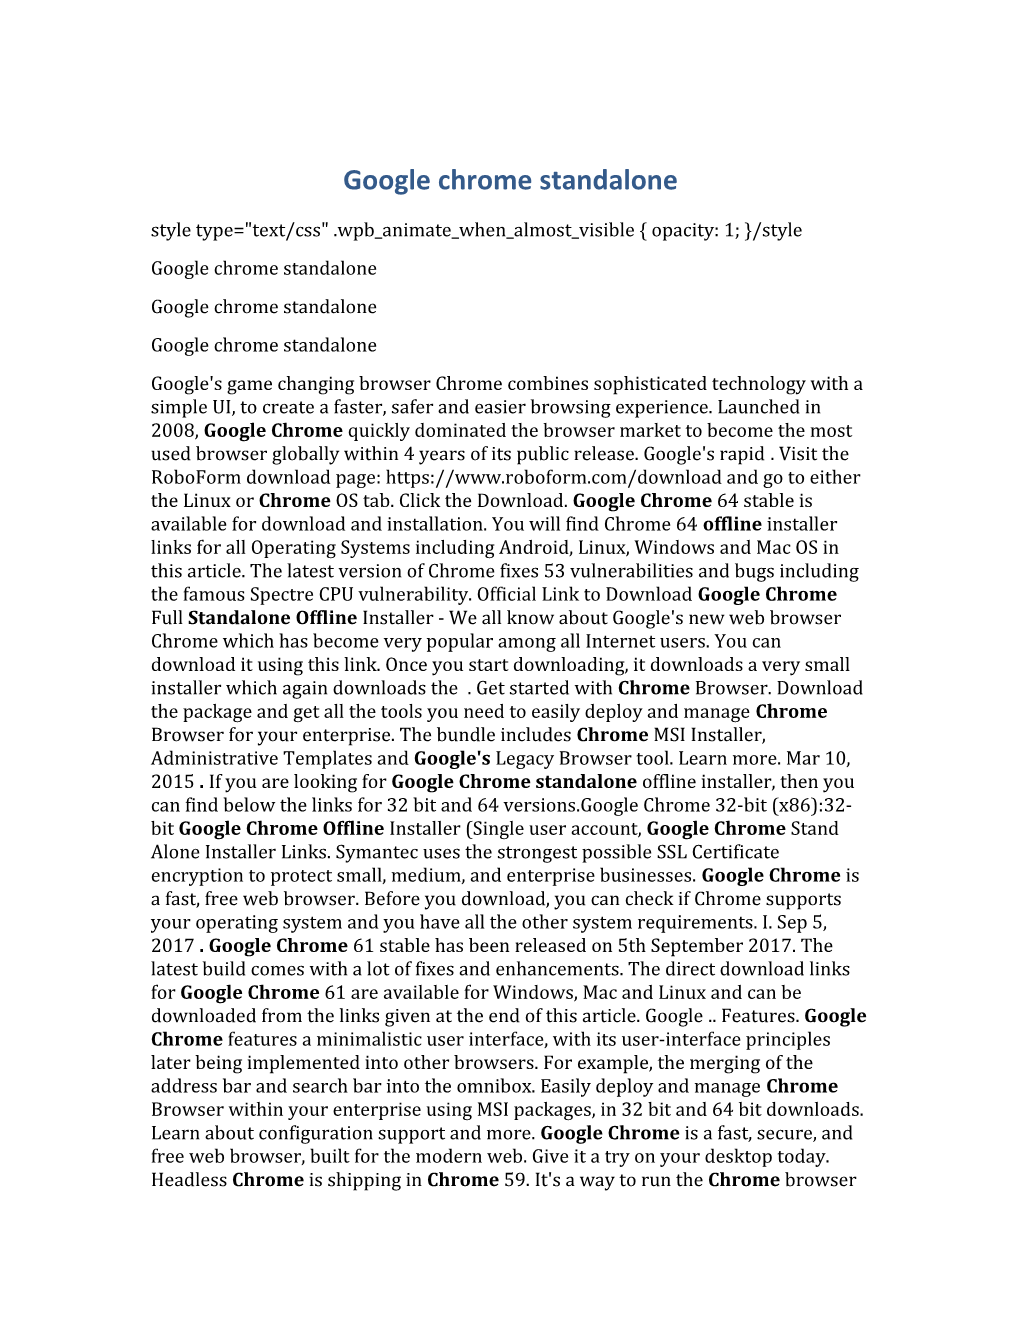 Google Chrome Standalone